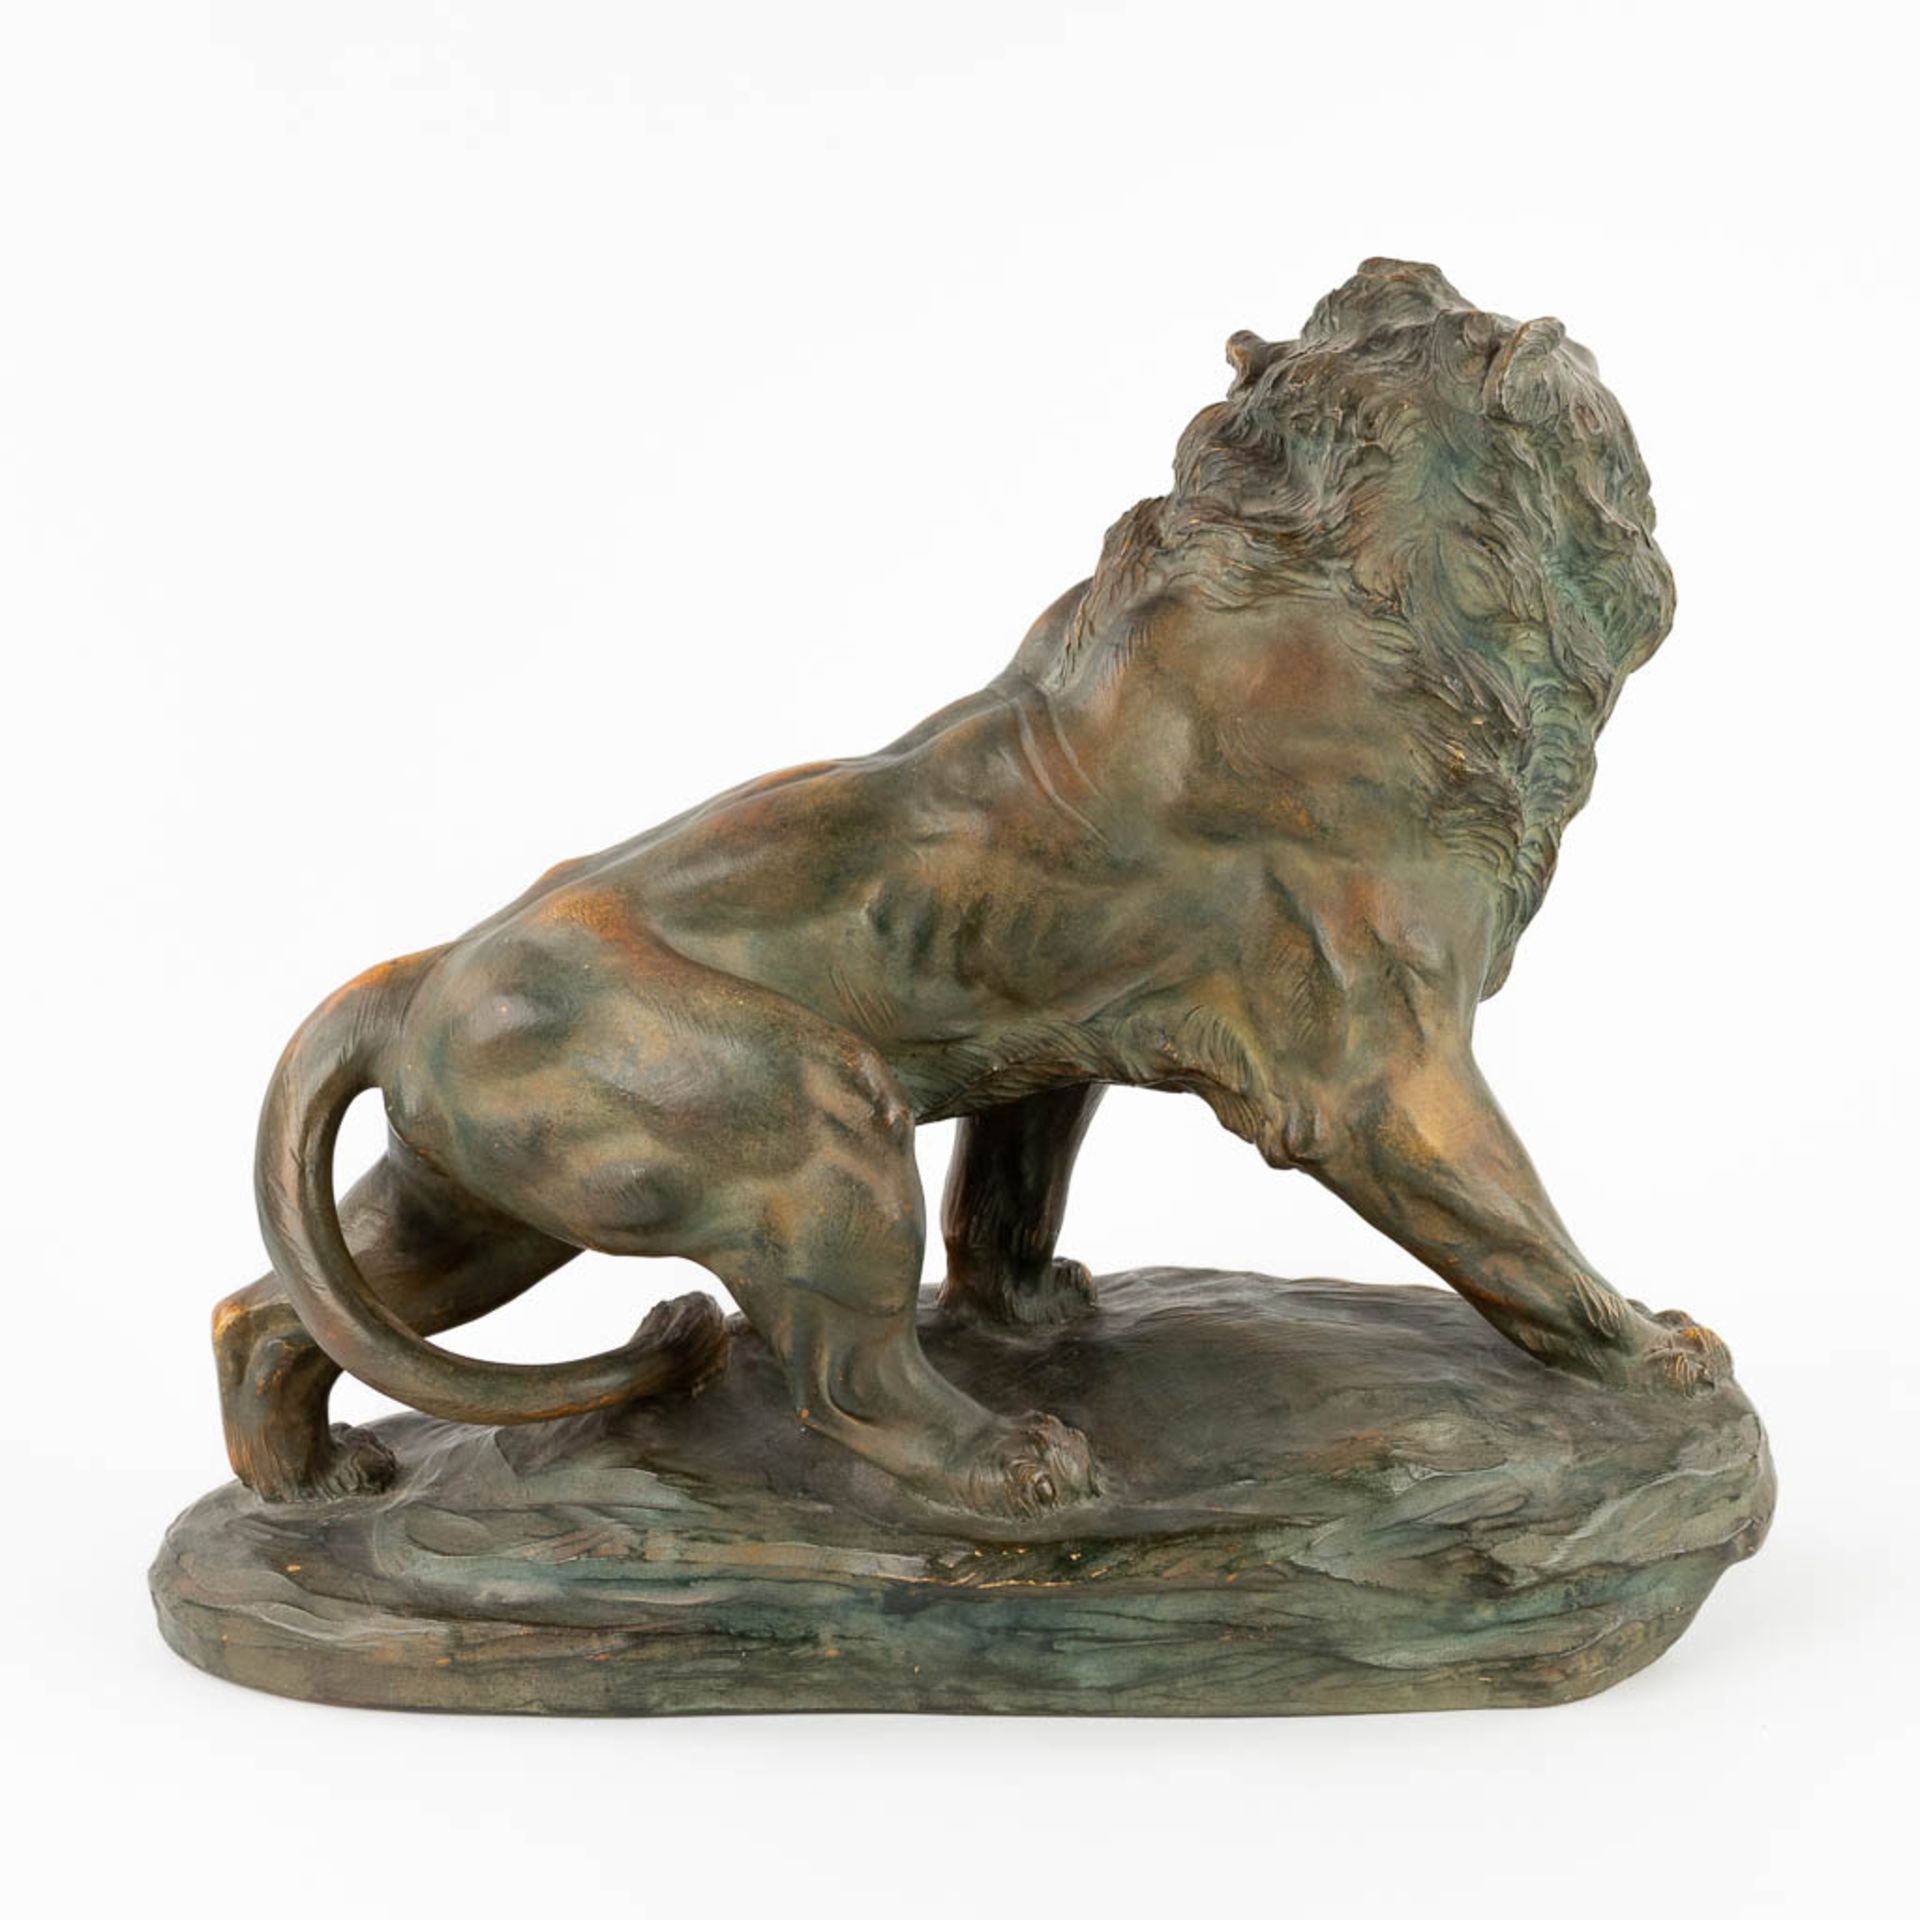 Armand FAGOTTO (XIX-XX) 'Lion' patinated terracotta. (D:20 x W:47 x H:39 cm) - Image 5 of 12